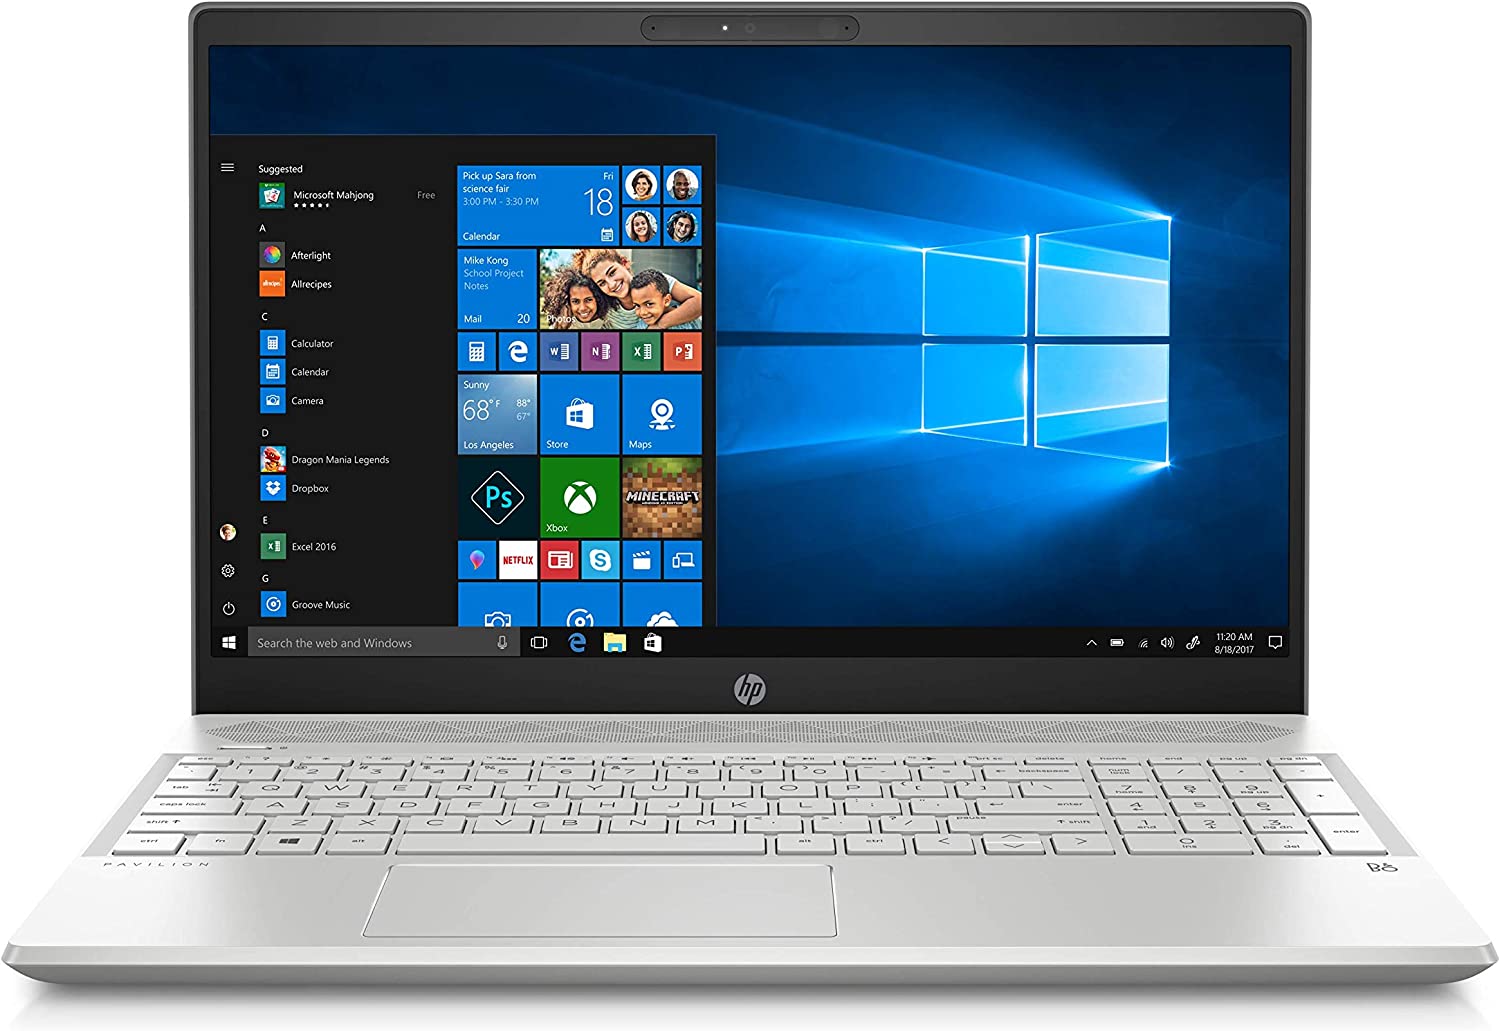 Laptop HP Pavilion 15-cw1005la Windows 10 AMD Ryzen 7 3700U 16GB RAM 1TB HDD + 128GB SSD Full HD 15.6